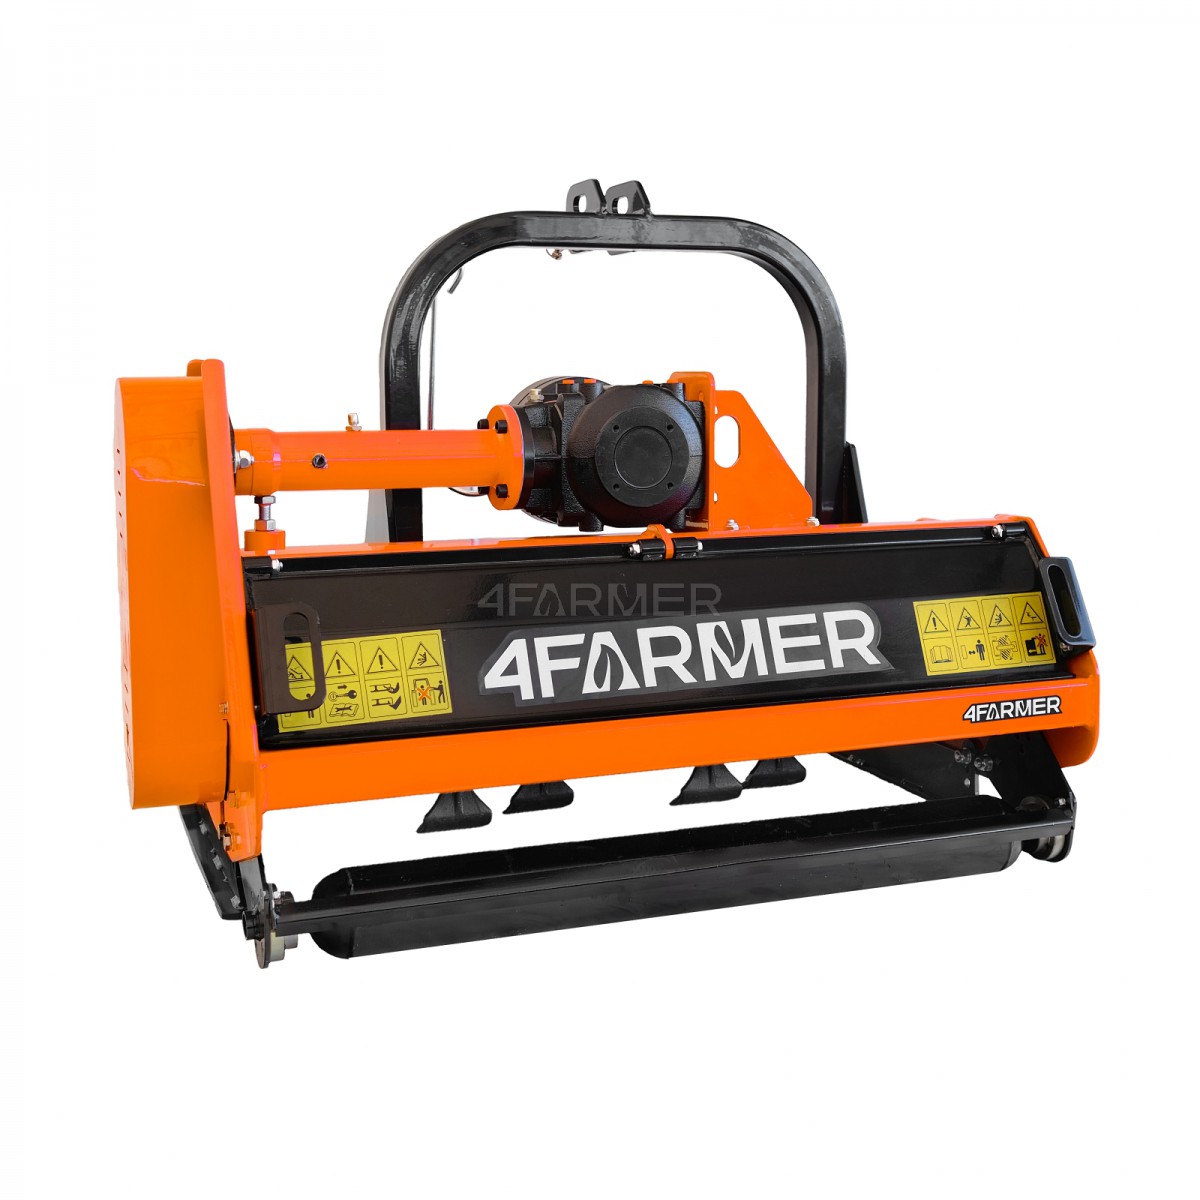 EFGC 105D 4FARMER flail mower - orange